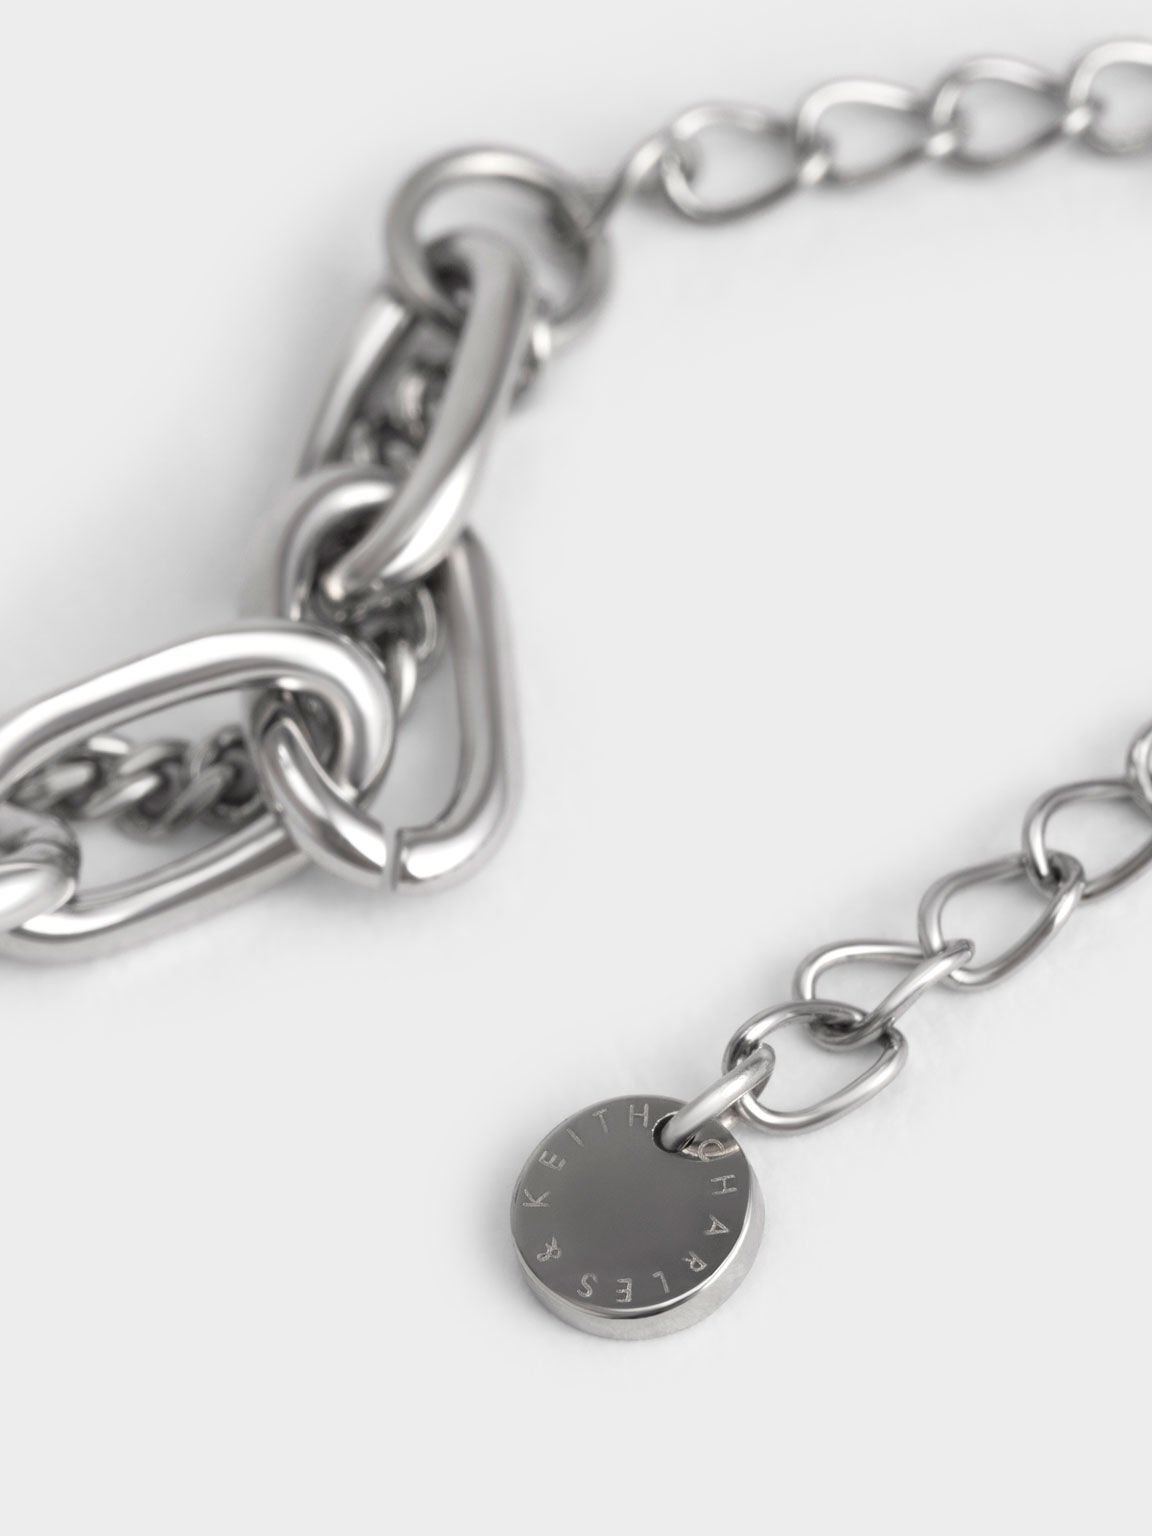 necklace Gigi key chain charm bracelet huge sale 6 matching styles 